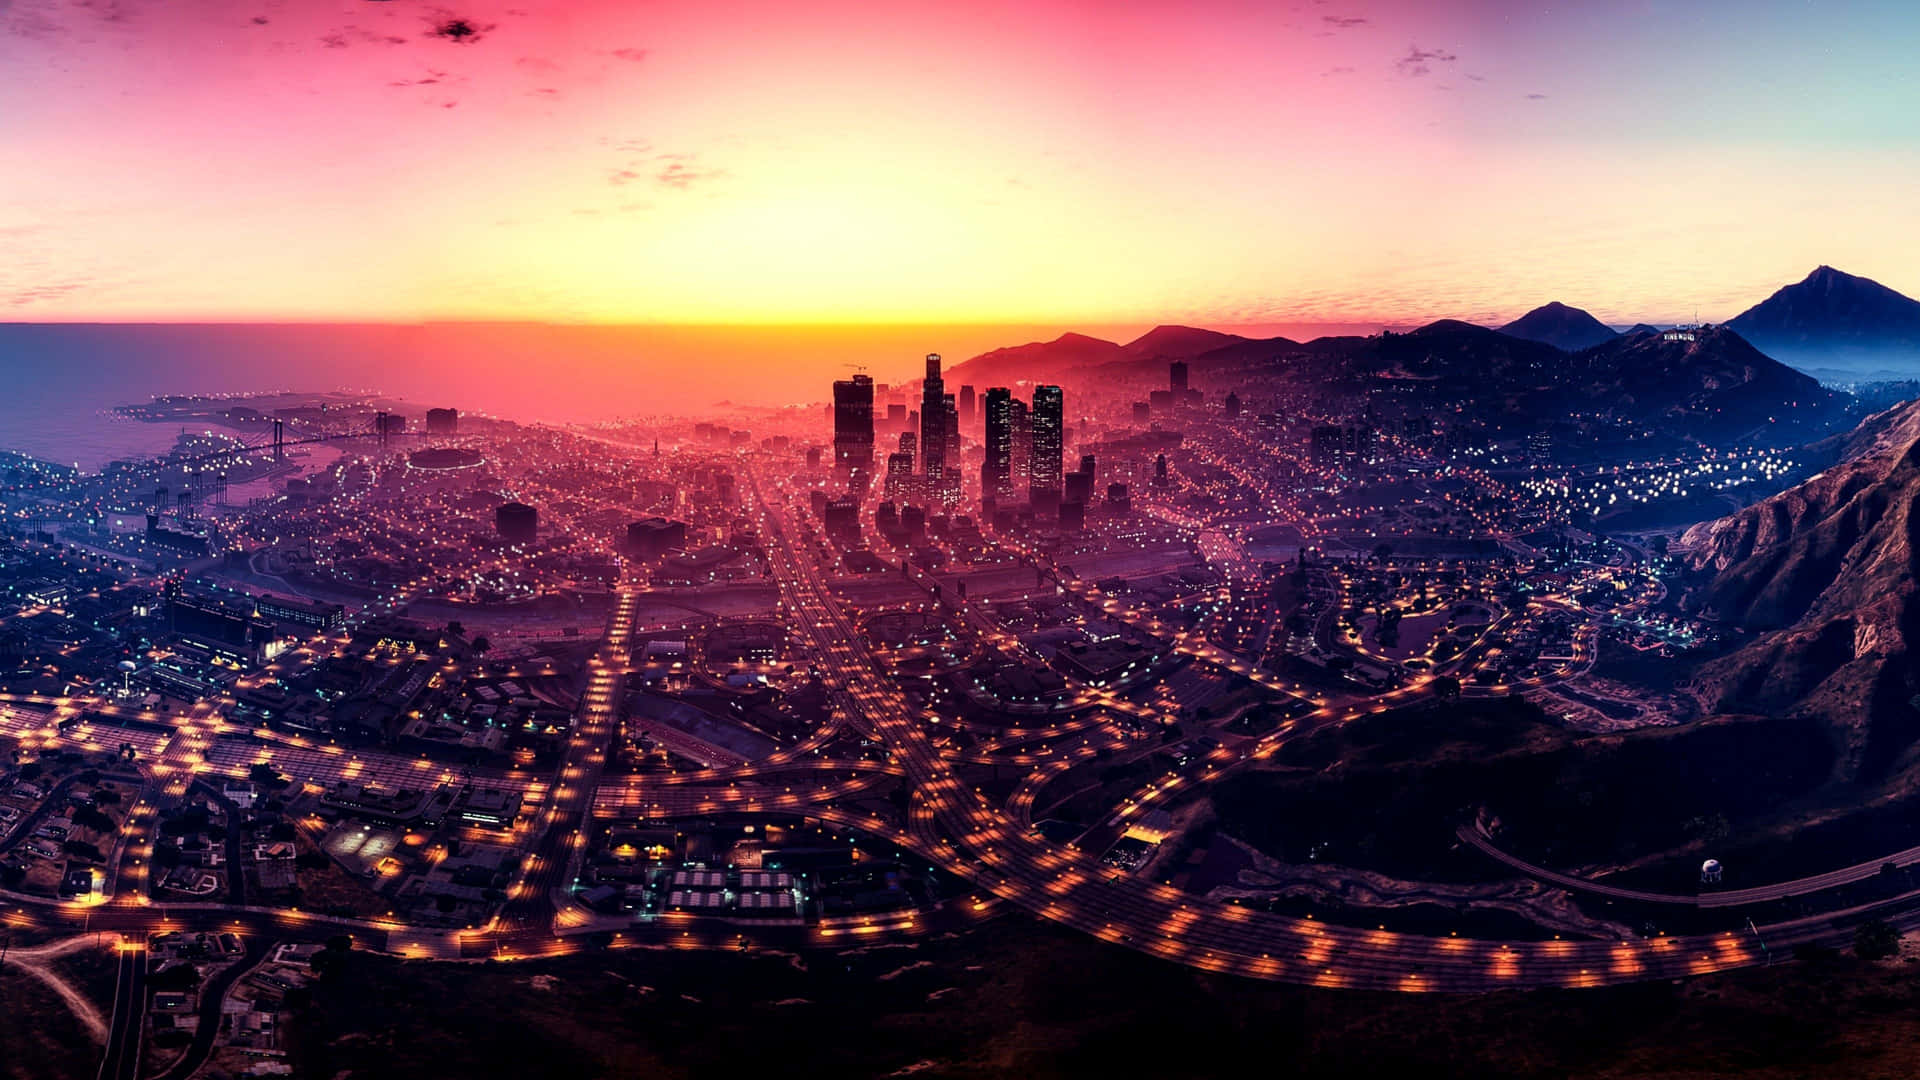 Gta Background City Of Los Santos Sunset